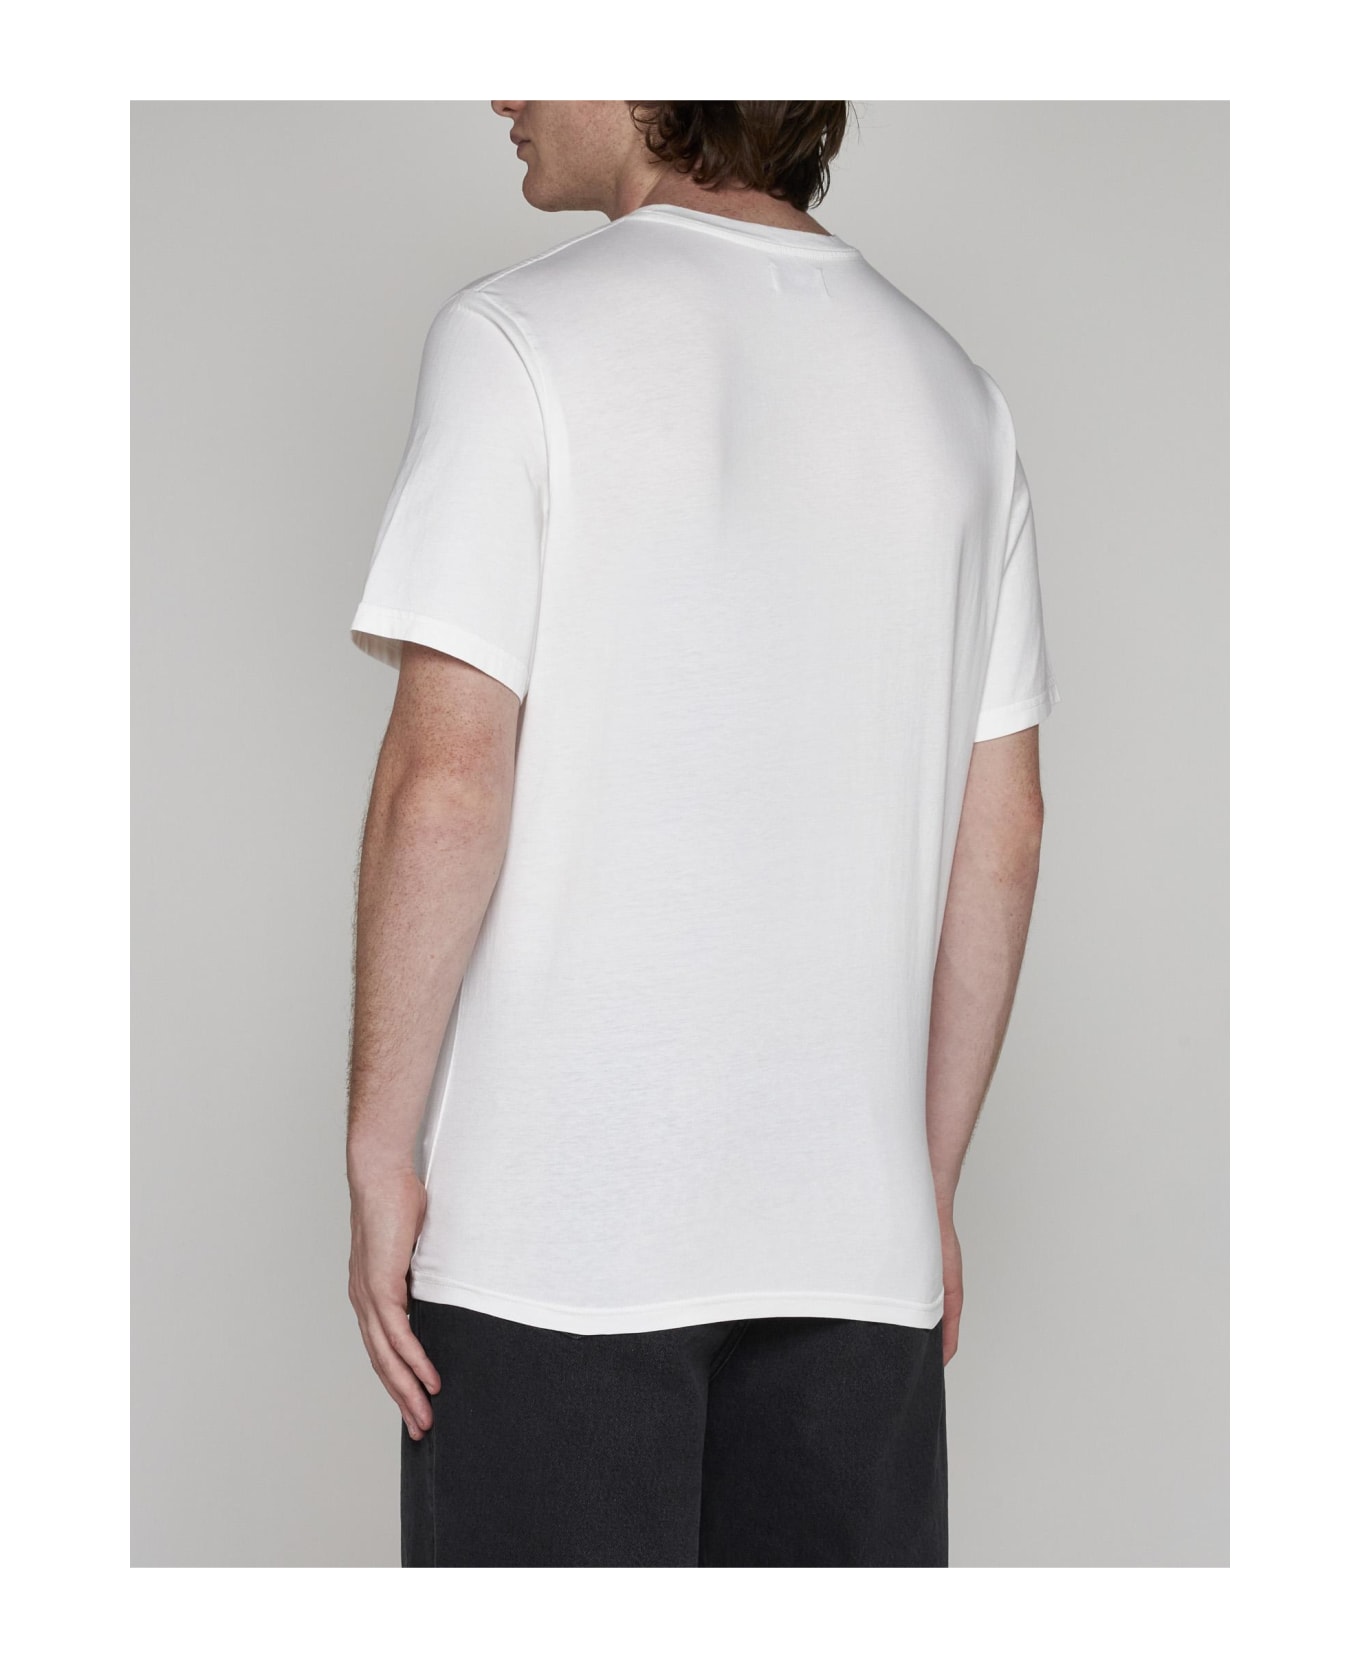 Autry Logo Cotton T-shirt - bianco シャツ